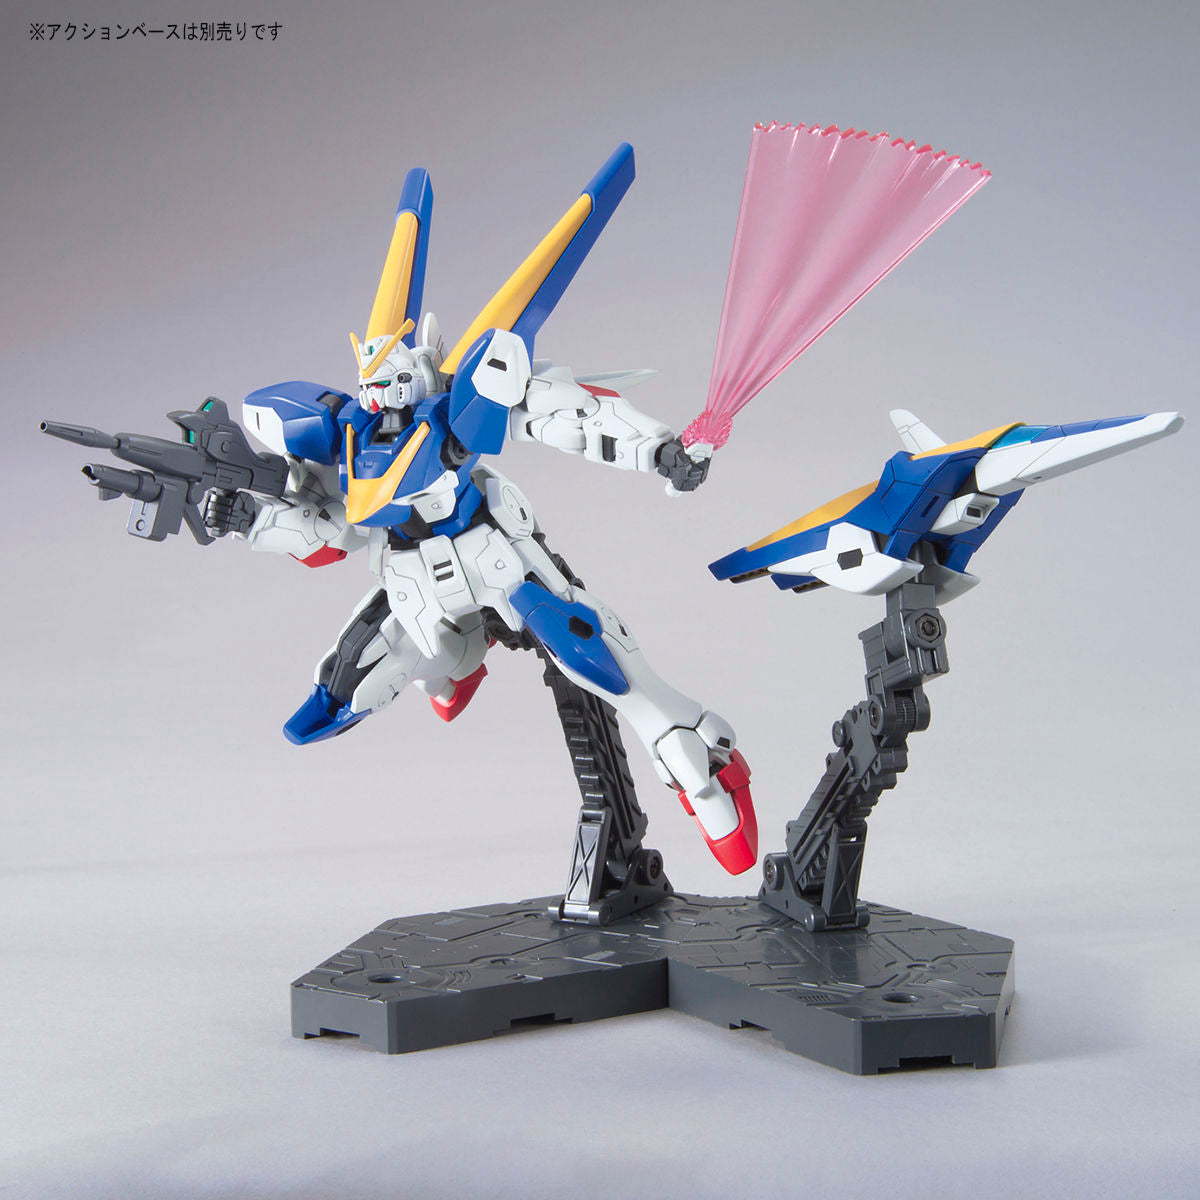 HGUC 1/144 #169 Victory Two Gundam